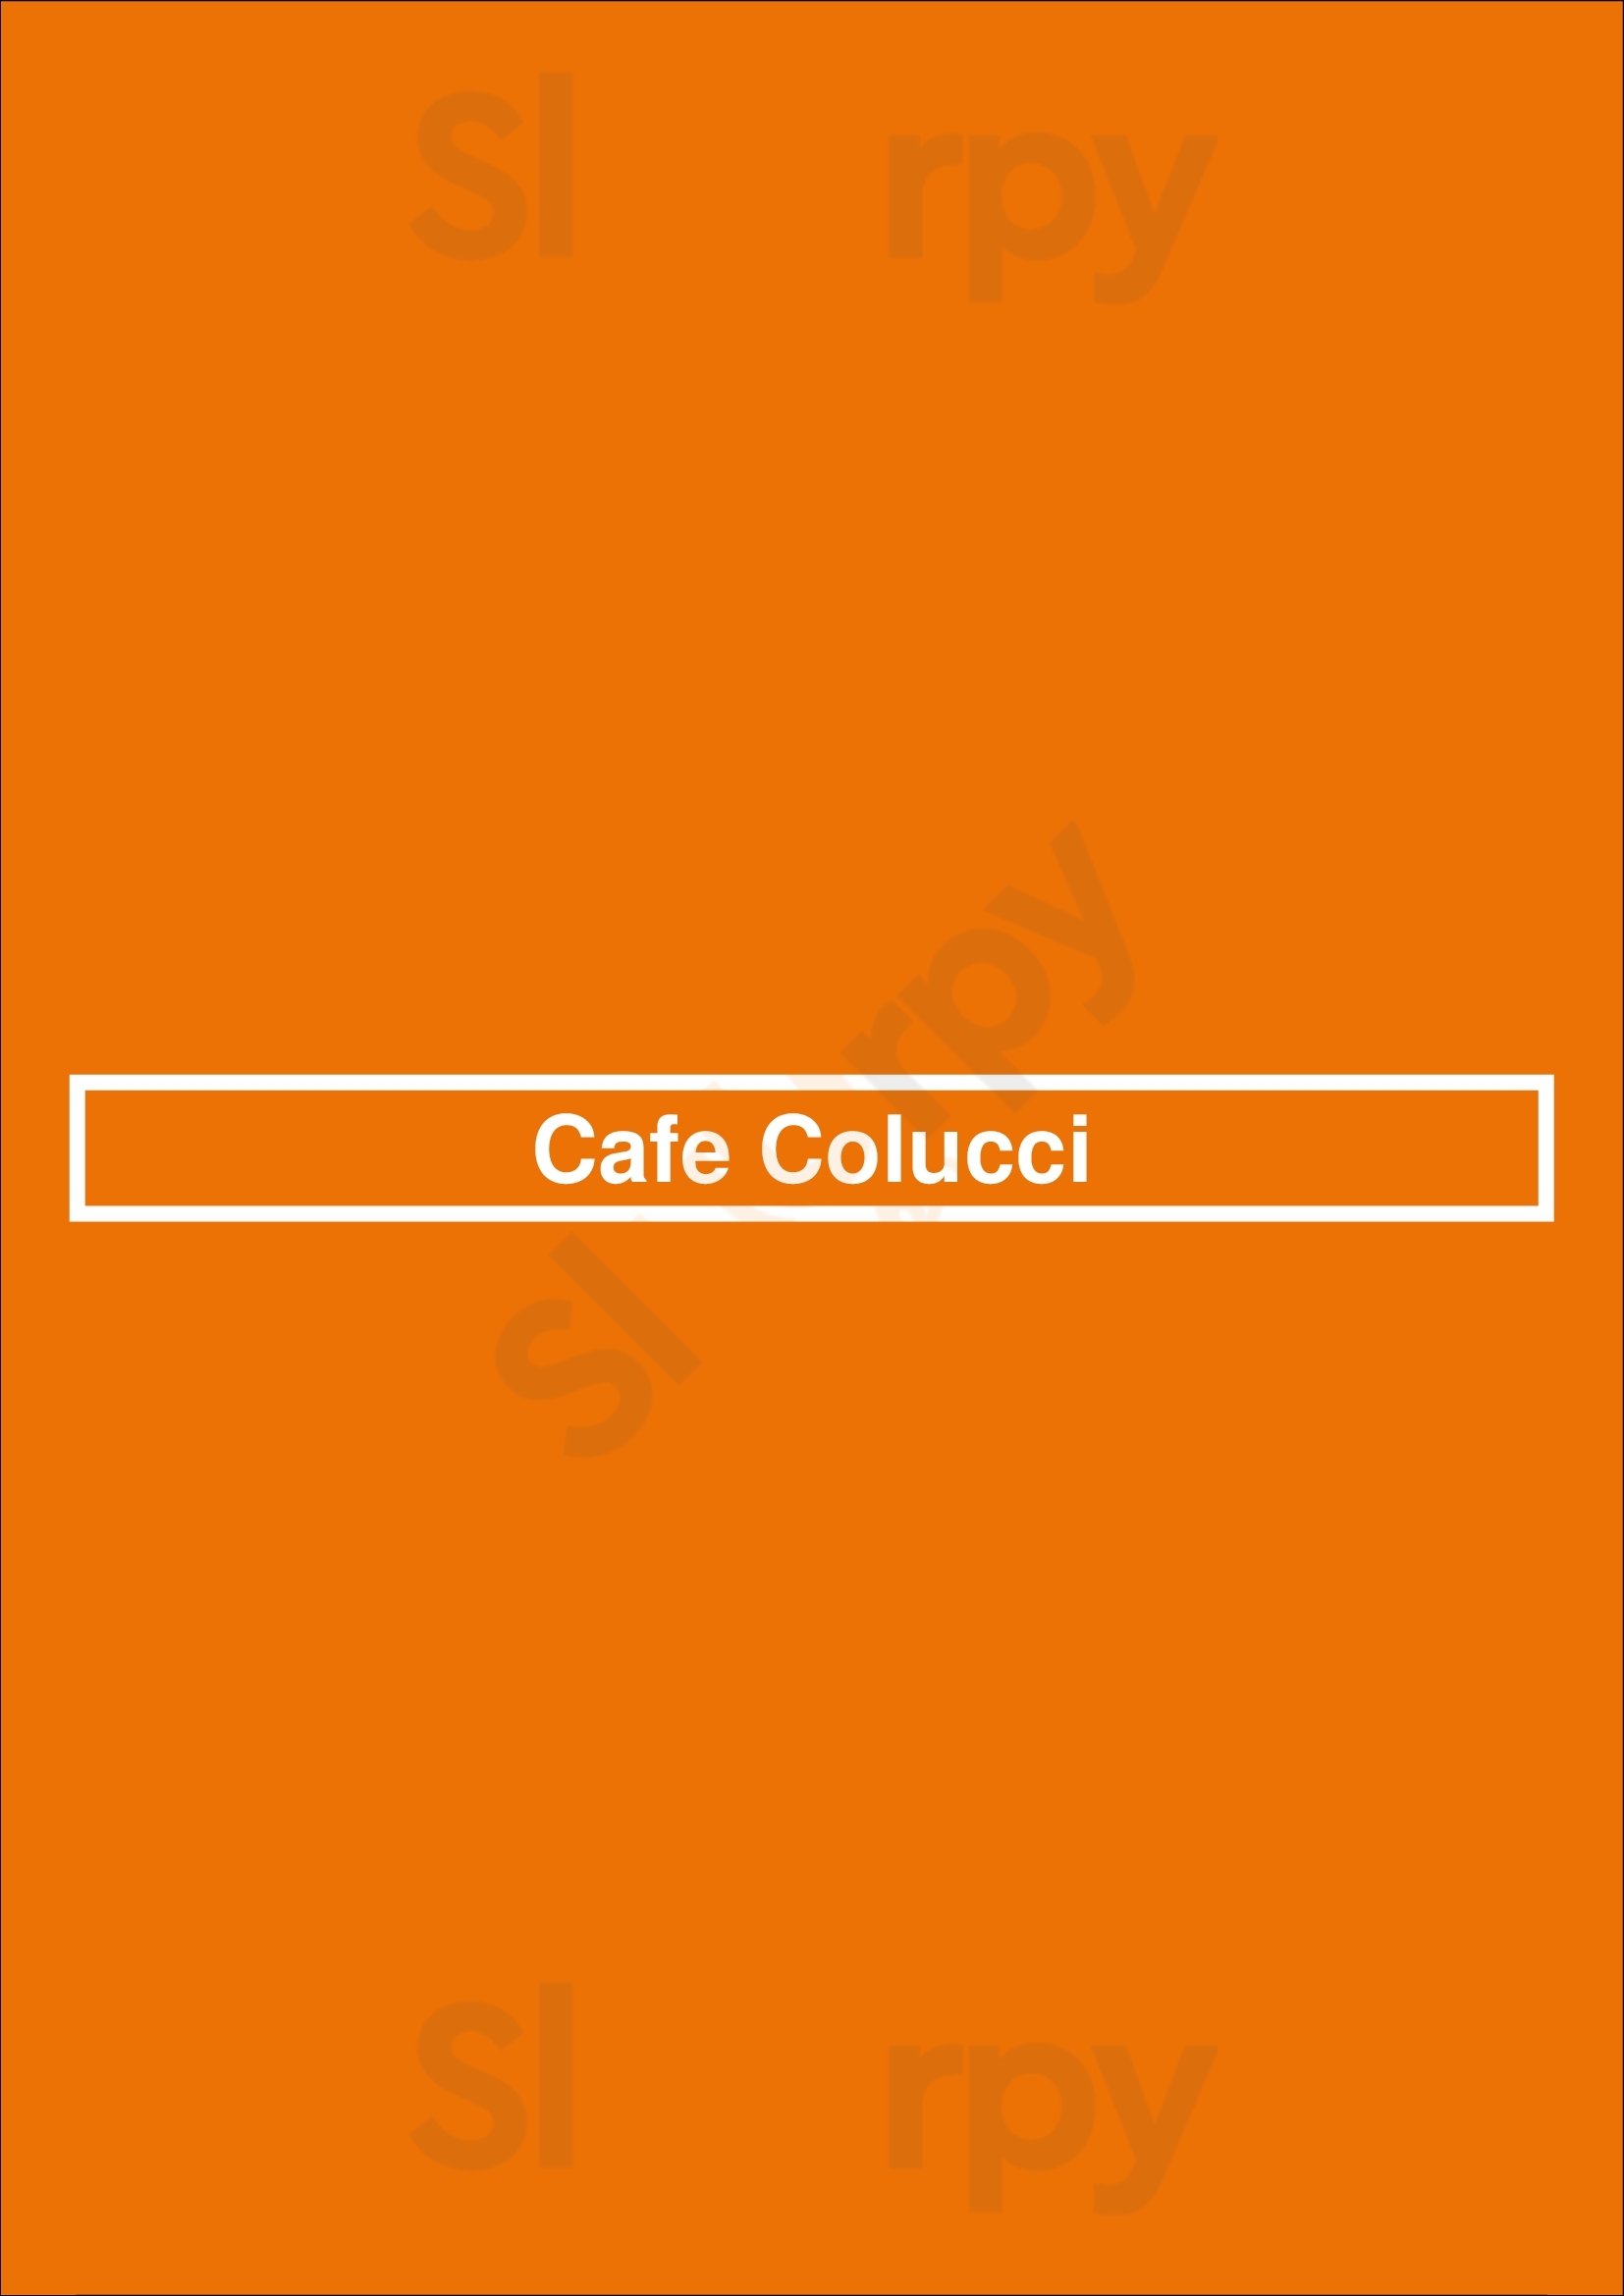 Cafe Colucci Oakland Menu - 1